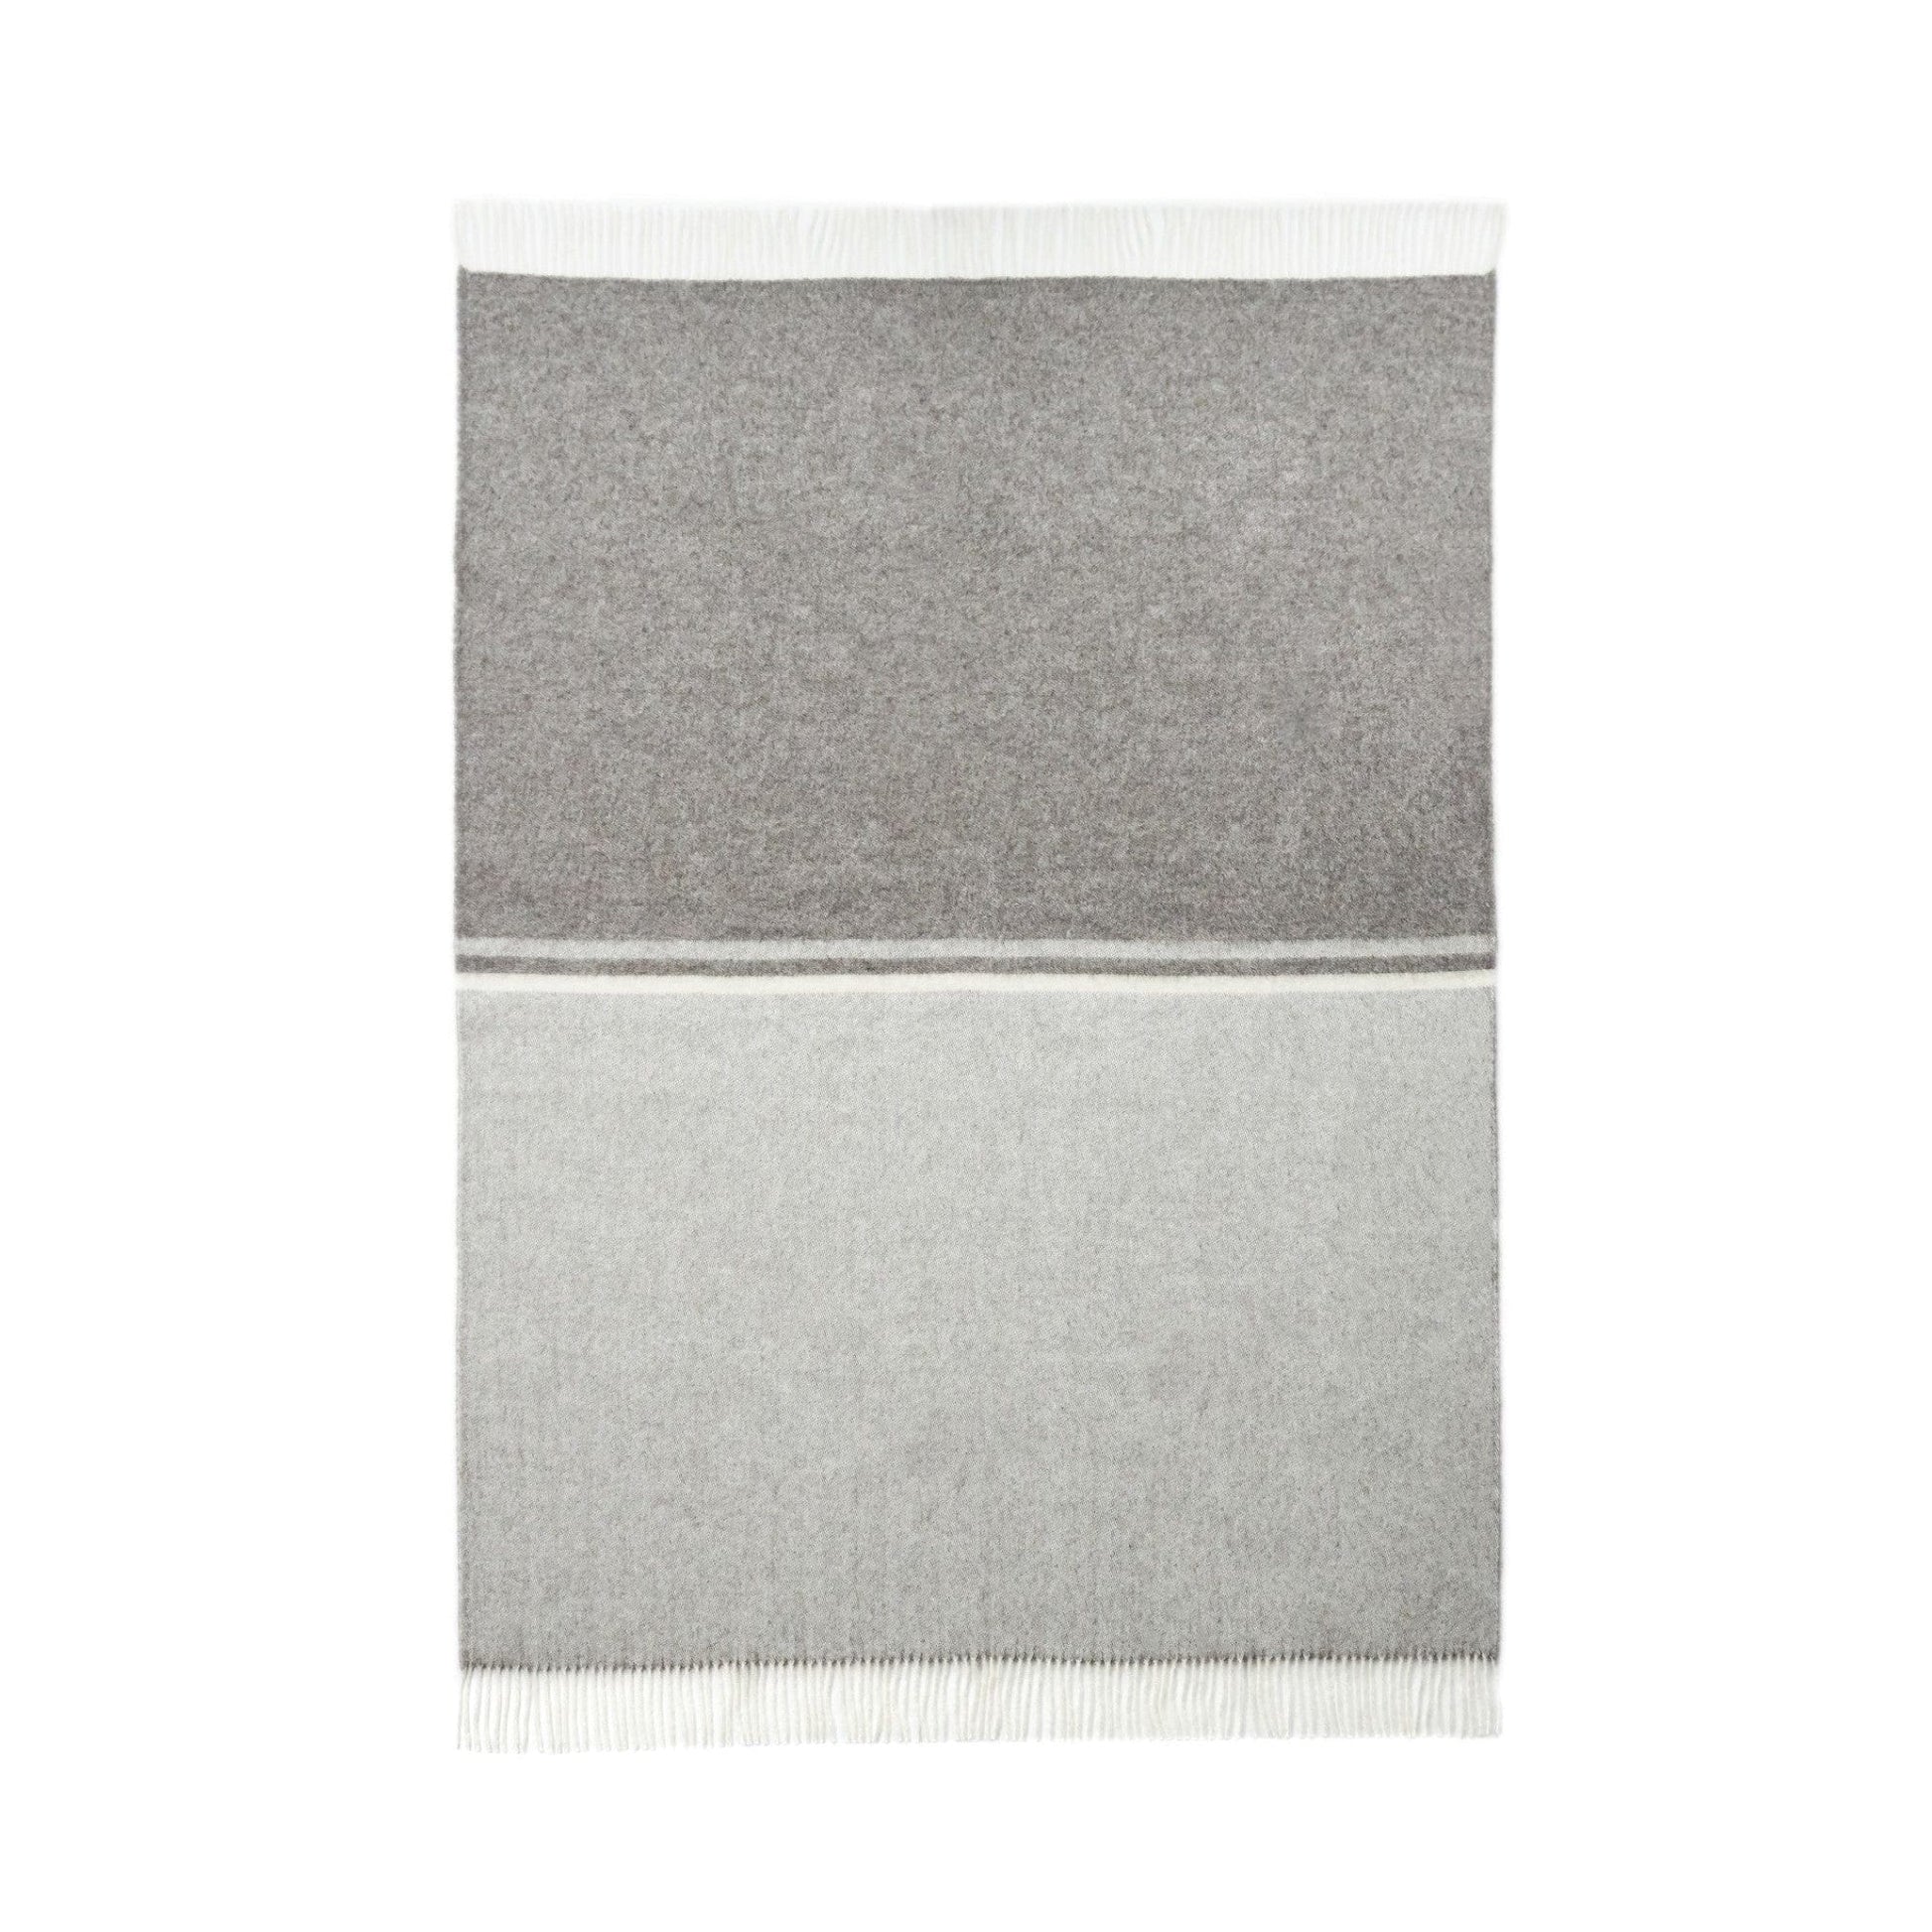 Scandinavian natural wool throw blanket | grey and light grey - Textiles & Pillows - San Rocco Italia